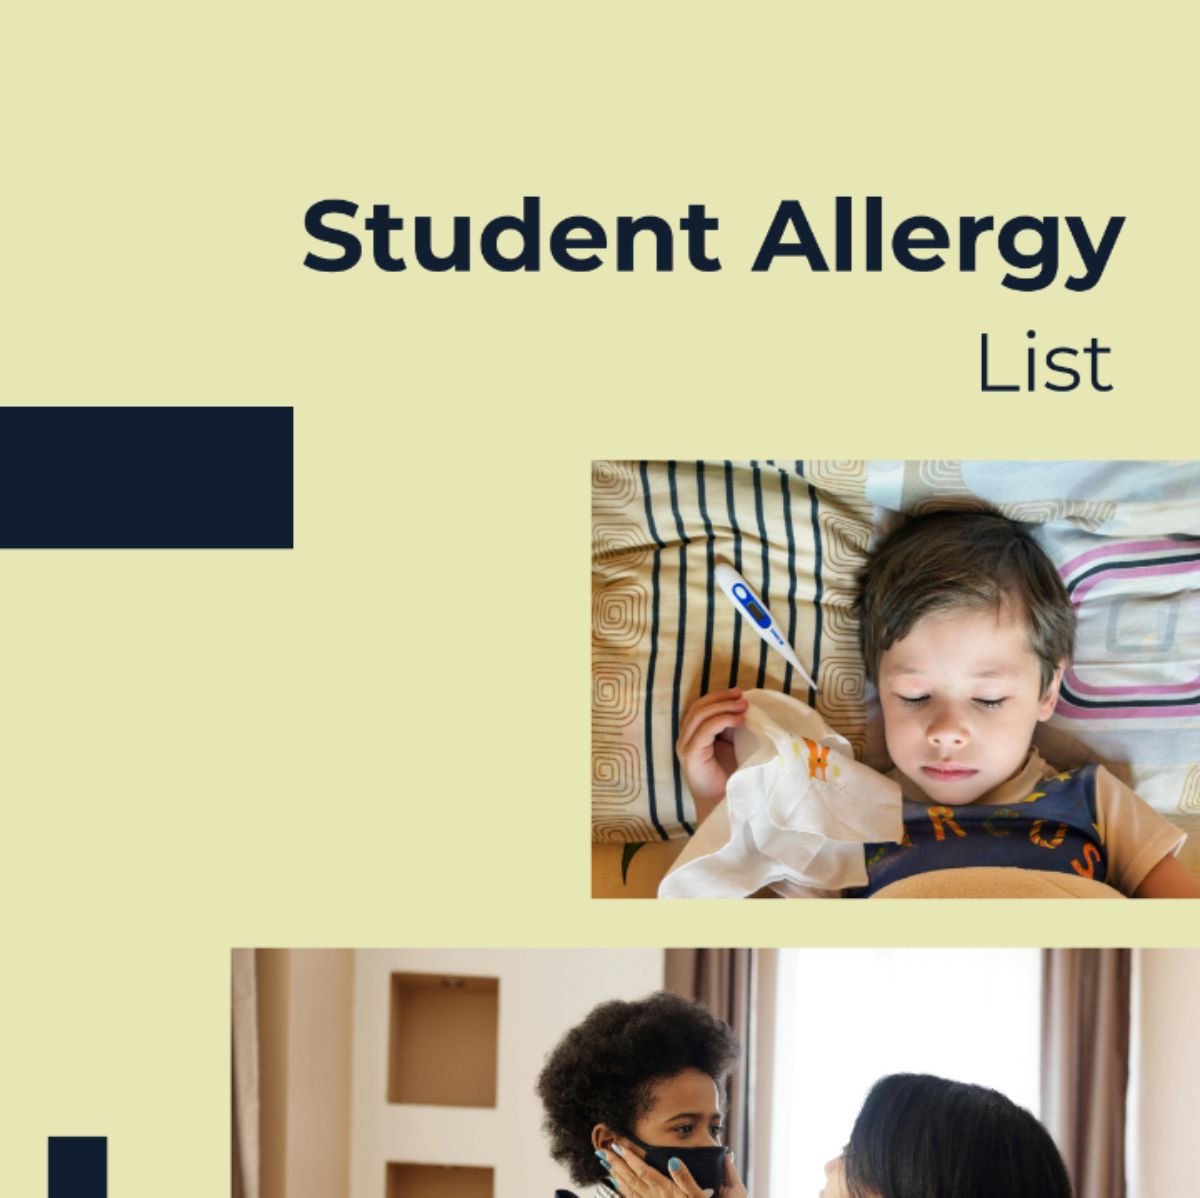 Student Allergy List Template